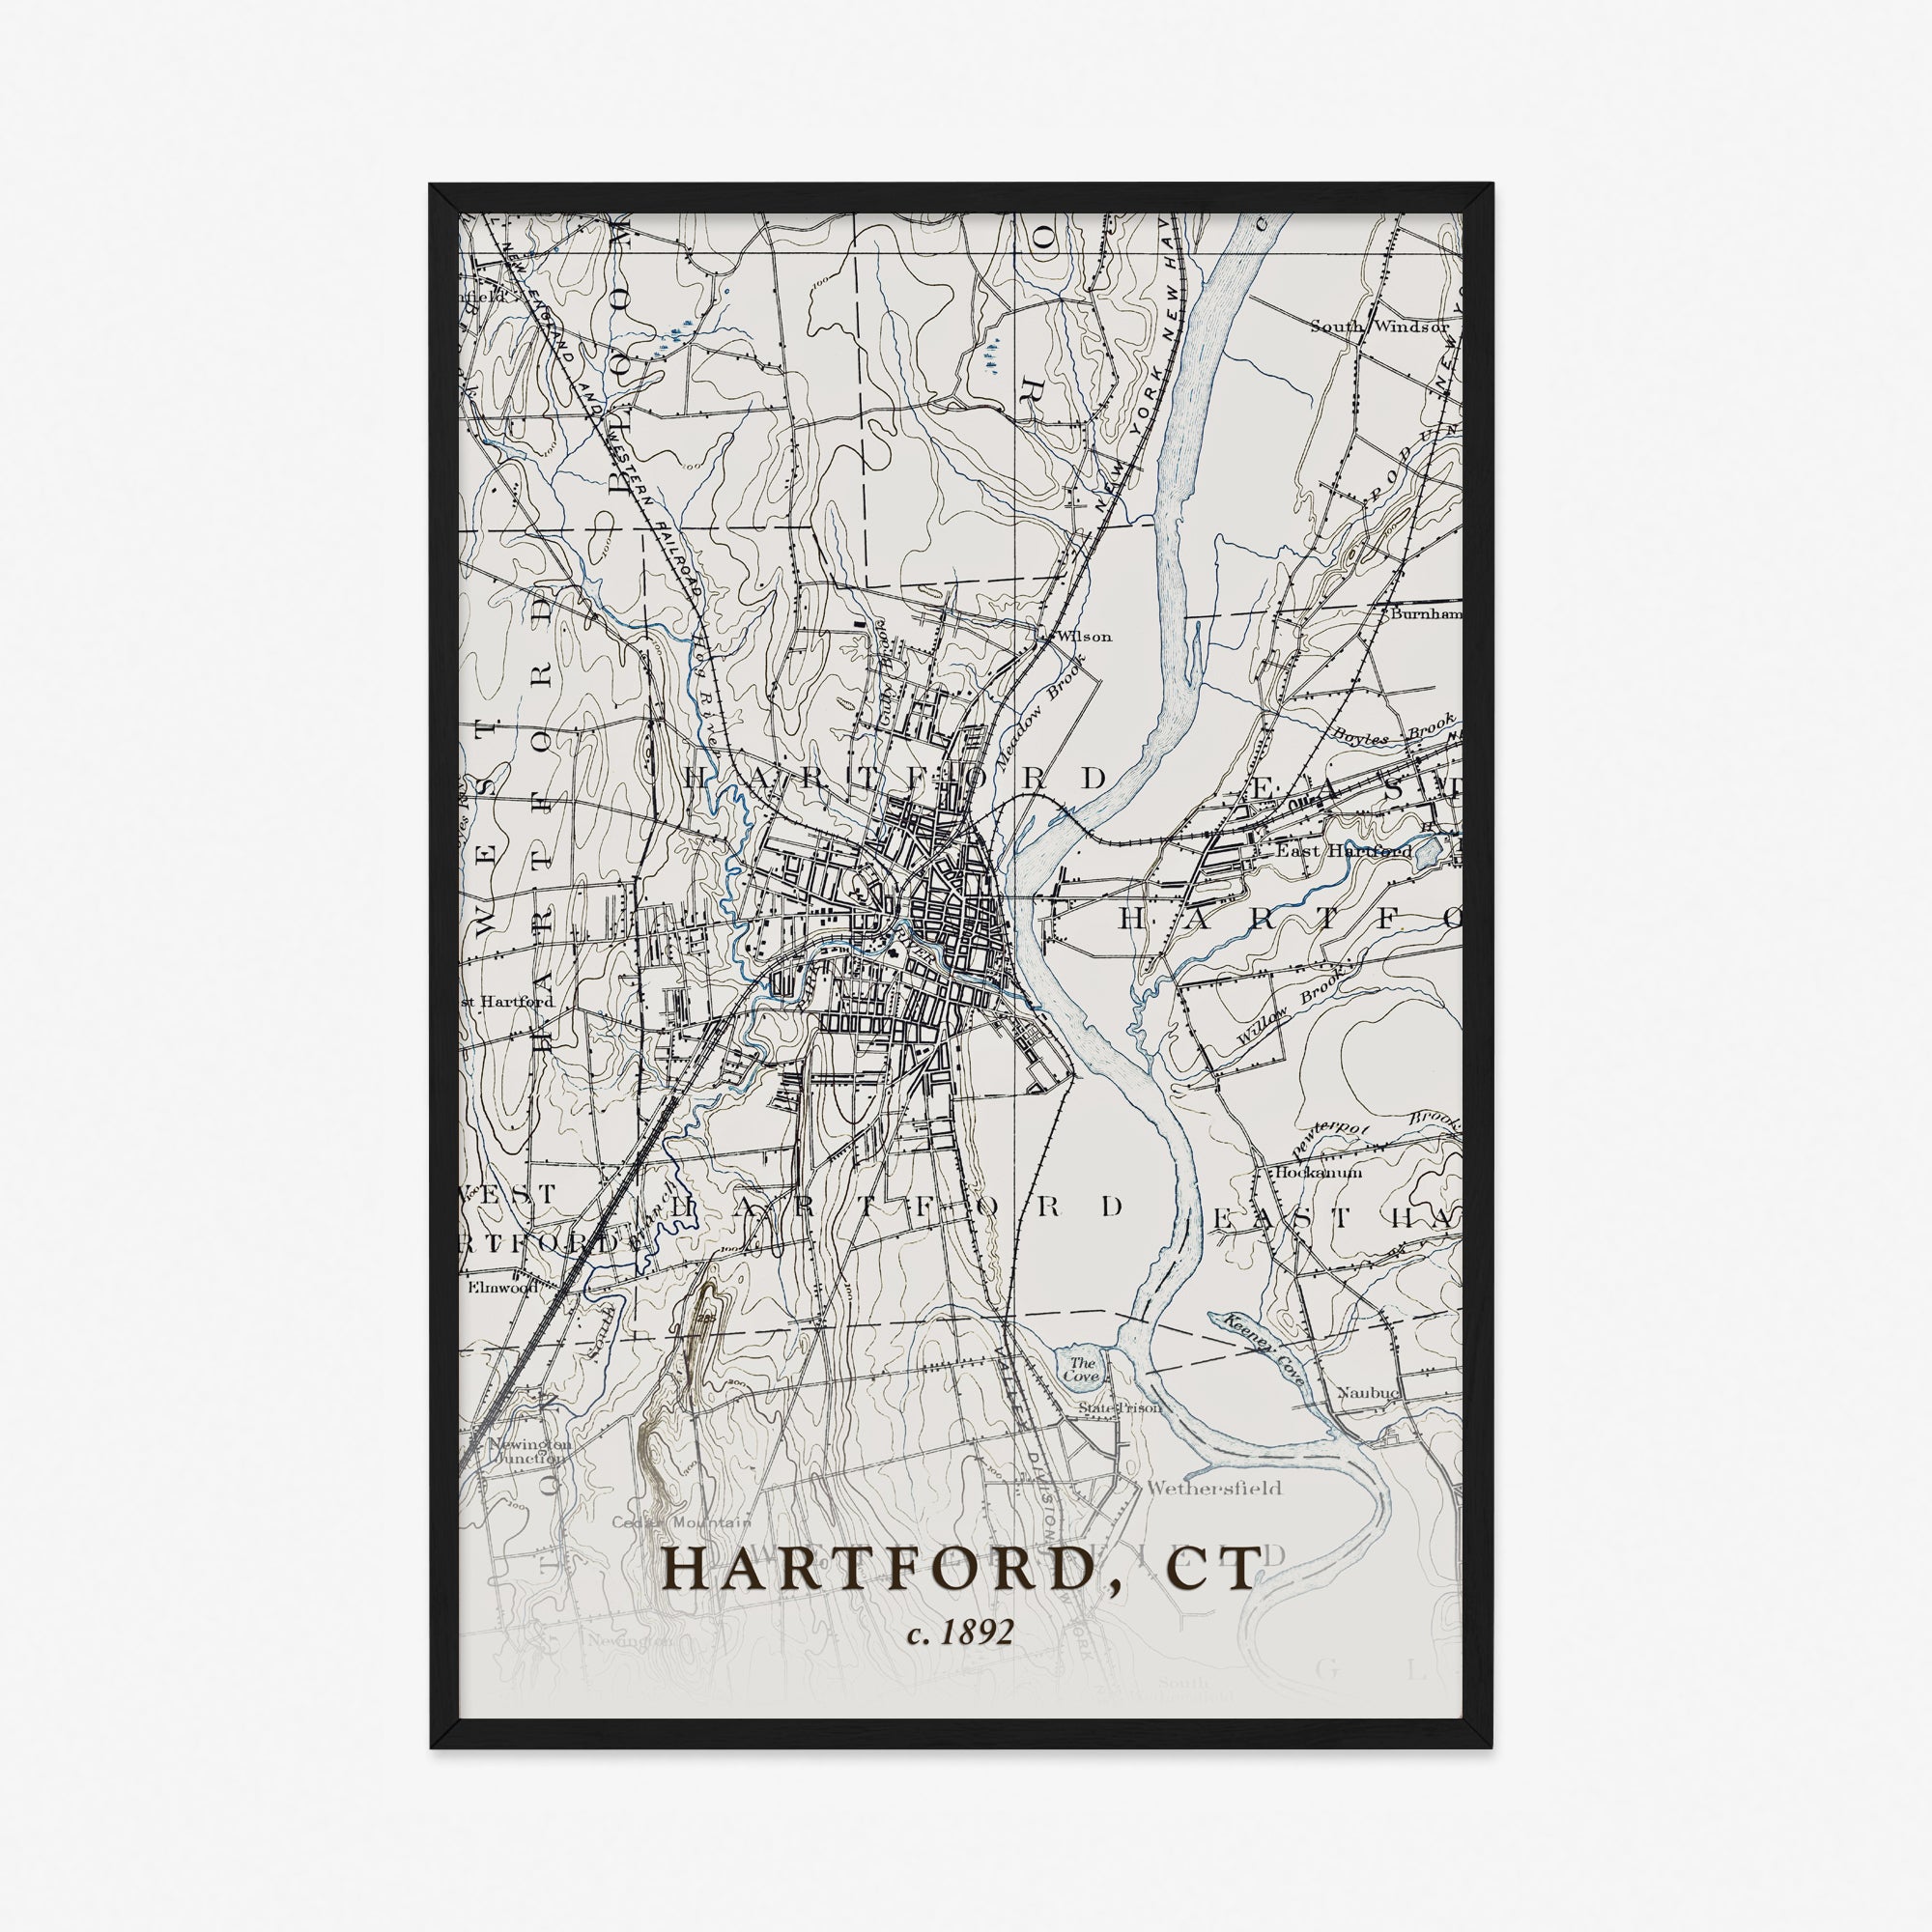 Hartford, CT - 1892 Topographic Map